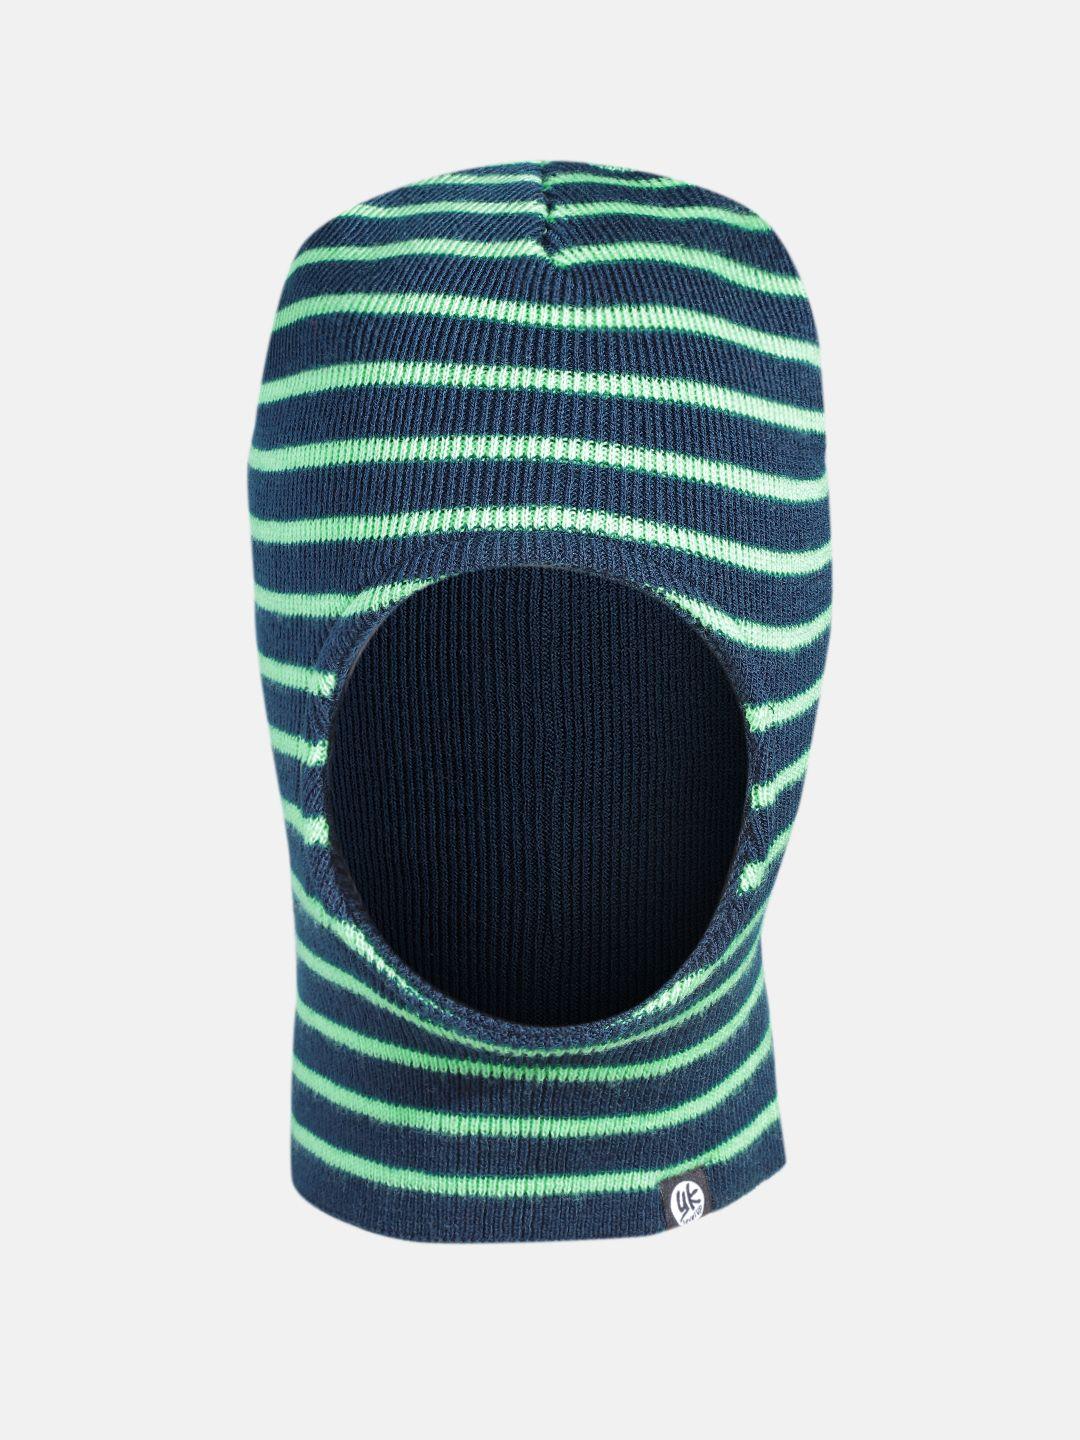 yk kids navy blue & green self striped monkey cap